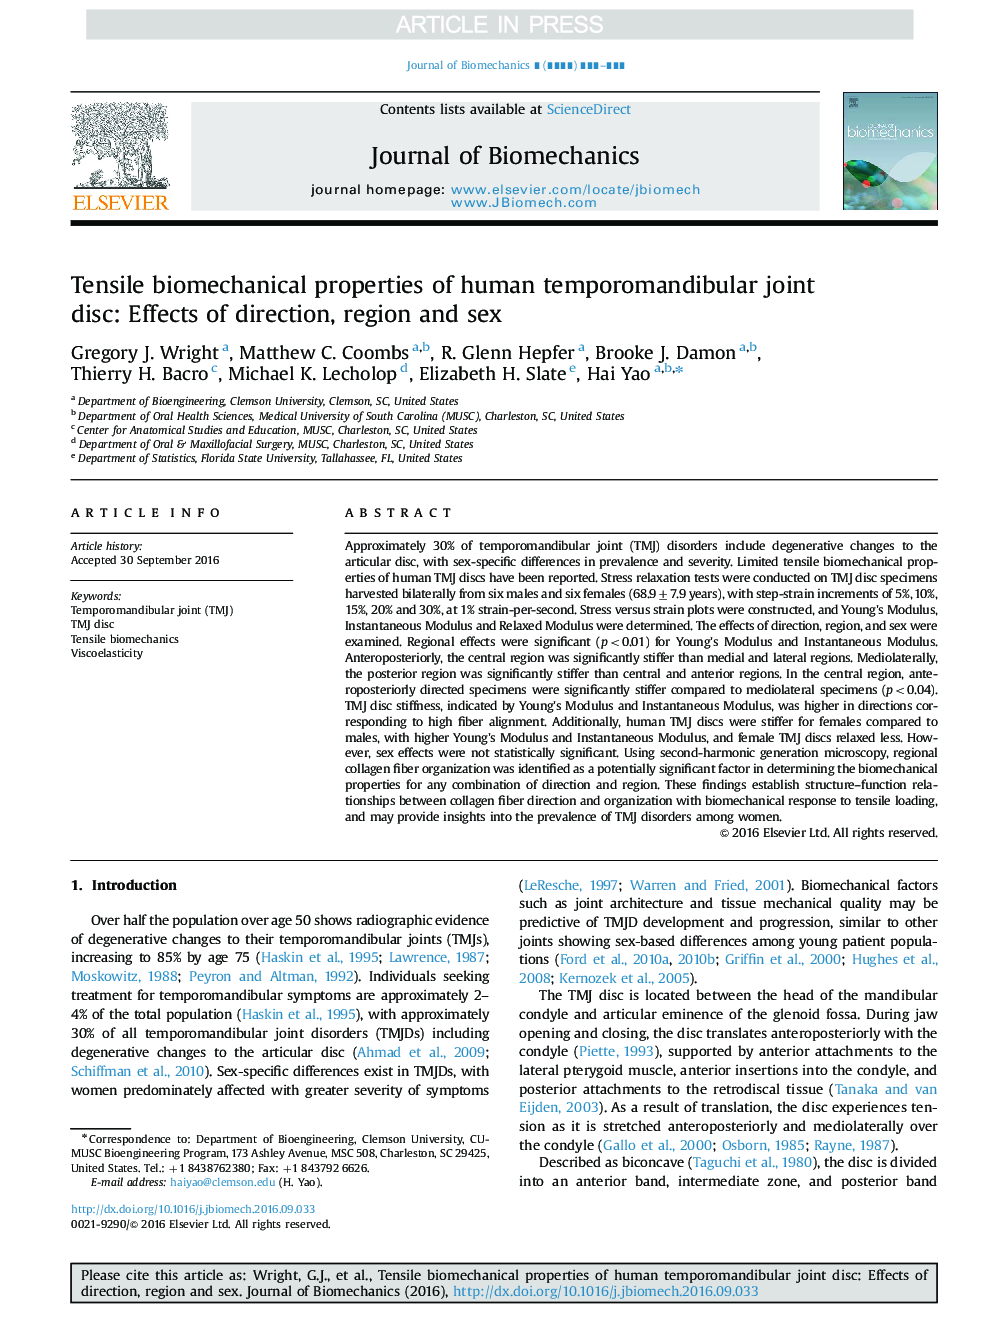 Tensile biomechanical properties of human temporomandibular joint disc: Effects of direction, region and sex